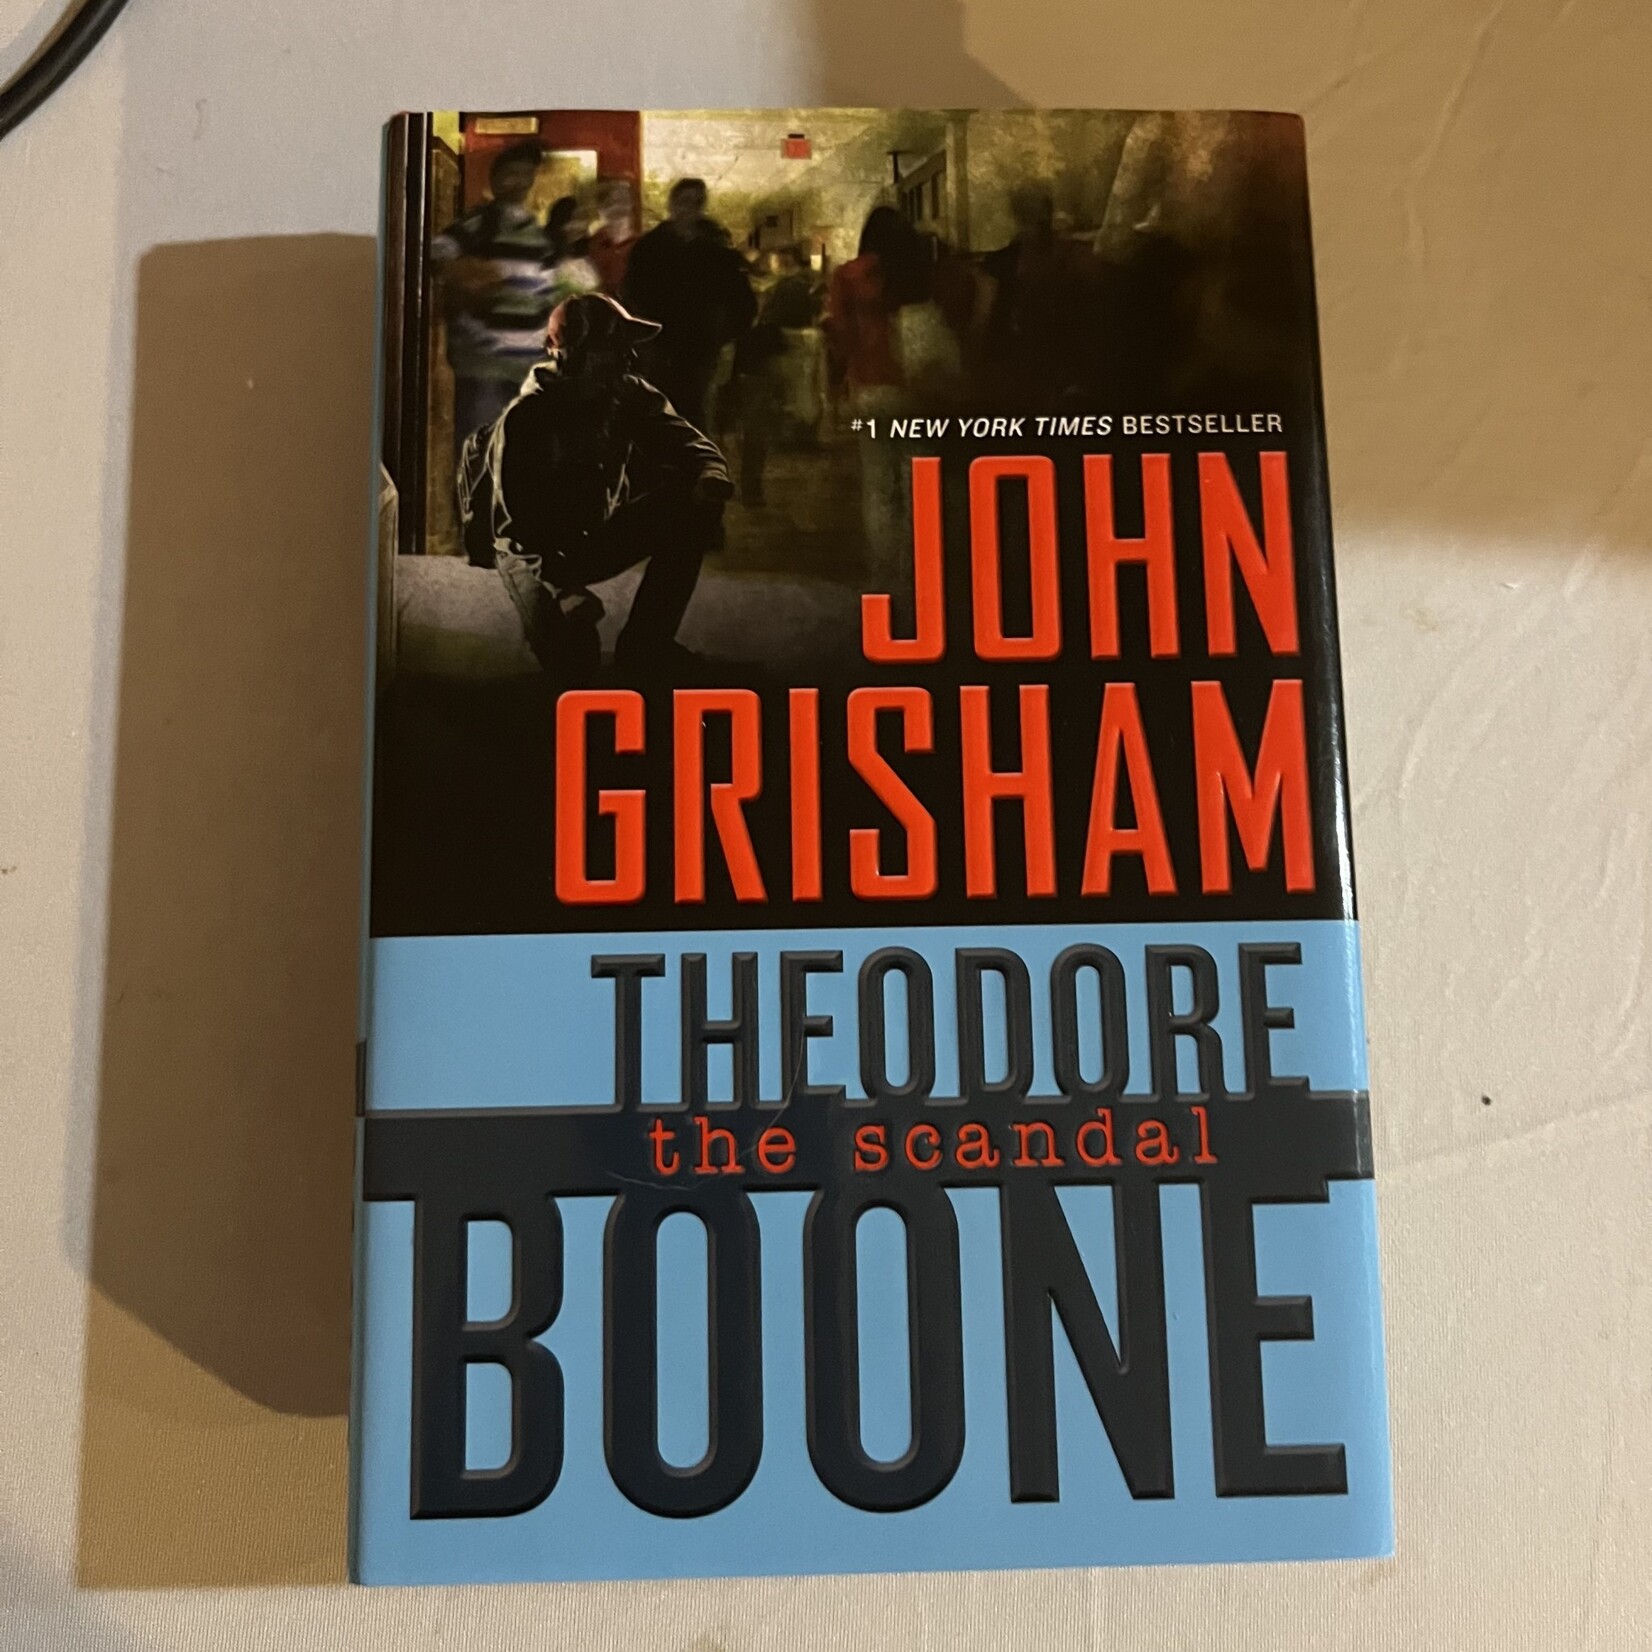 Theodore Boone, The Scandal